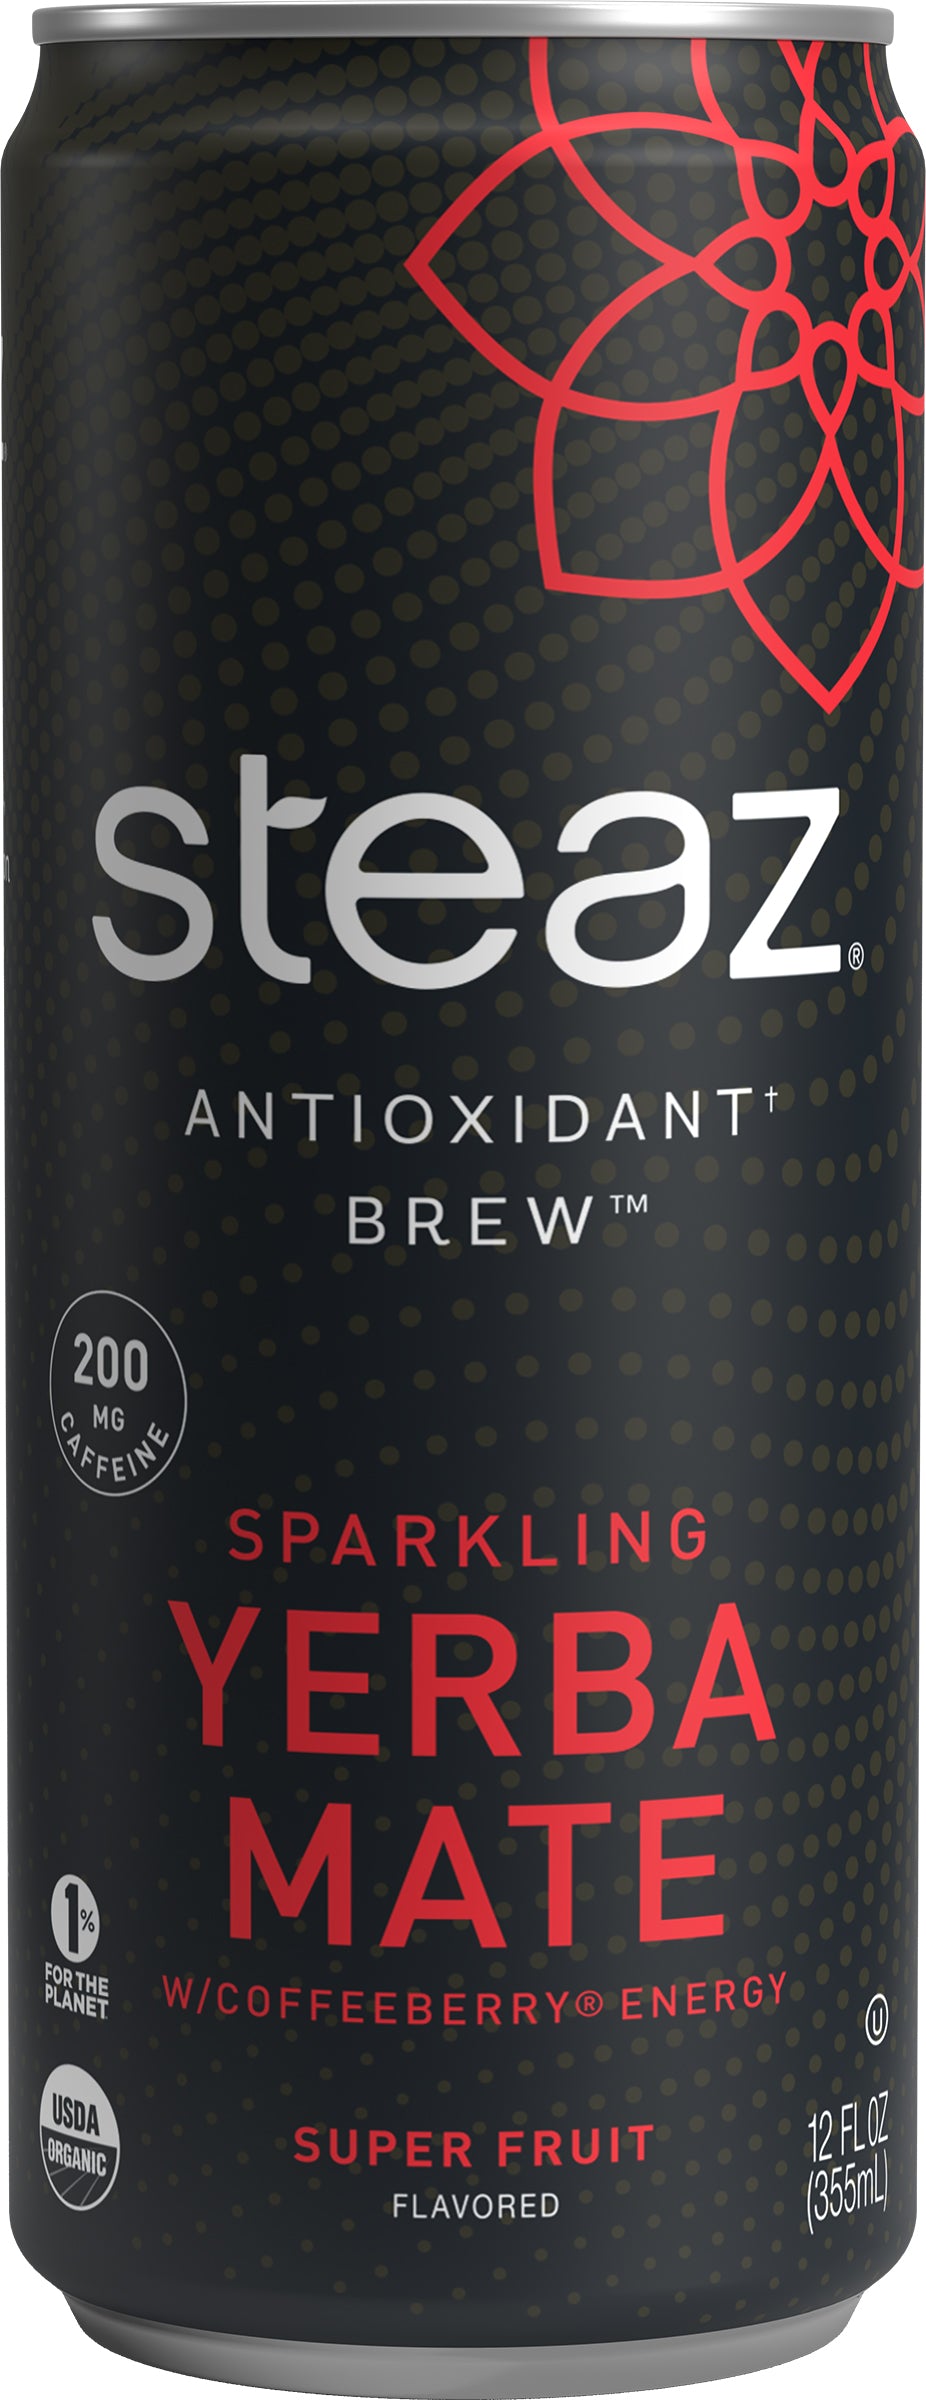 Steaz Organic Yerba Golden Mate Bev Drink Antioxidant Brew Case (12) 16oz  Cans